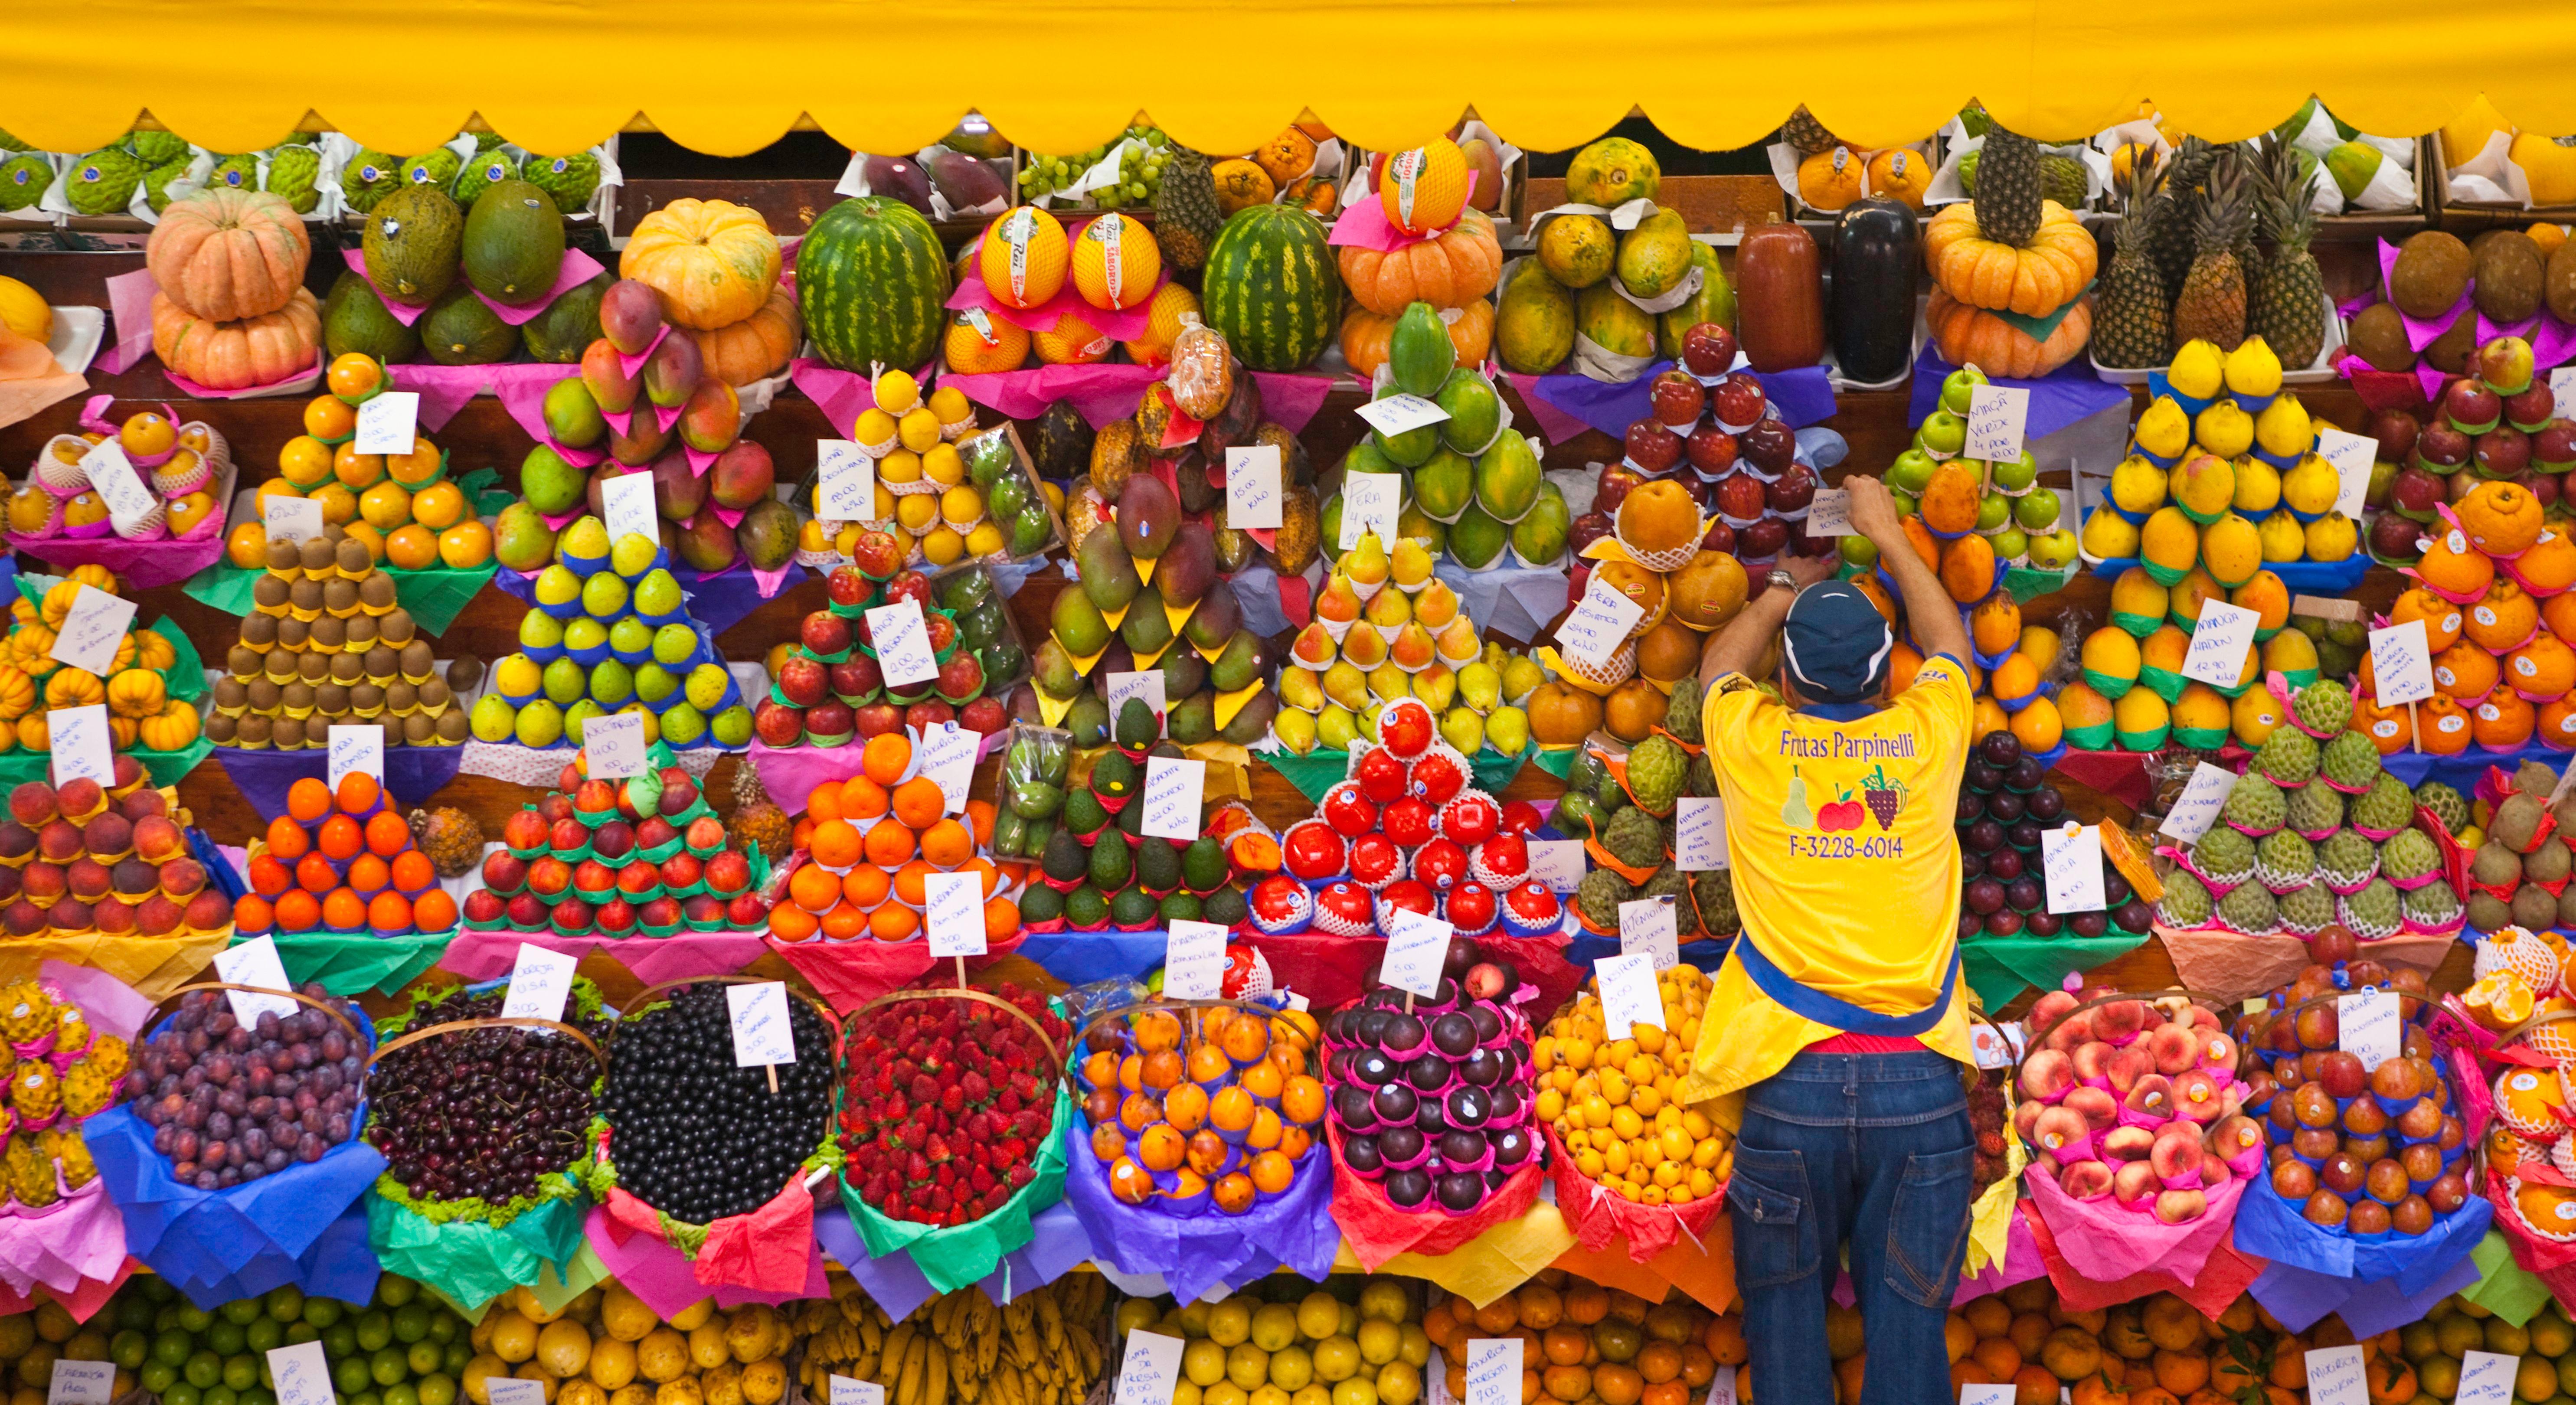 Фрукт чел. Фрукты Тайланда. Рио де Жанейро фрукты. Тайланд рынок фрукты. Фруктовый рынок.